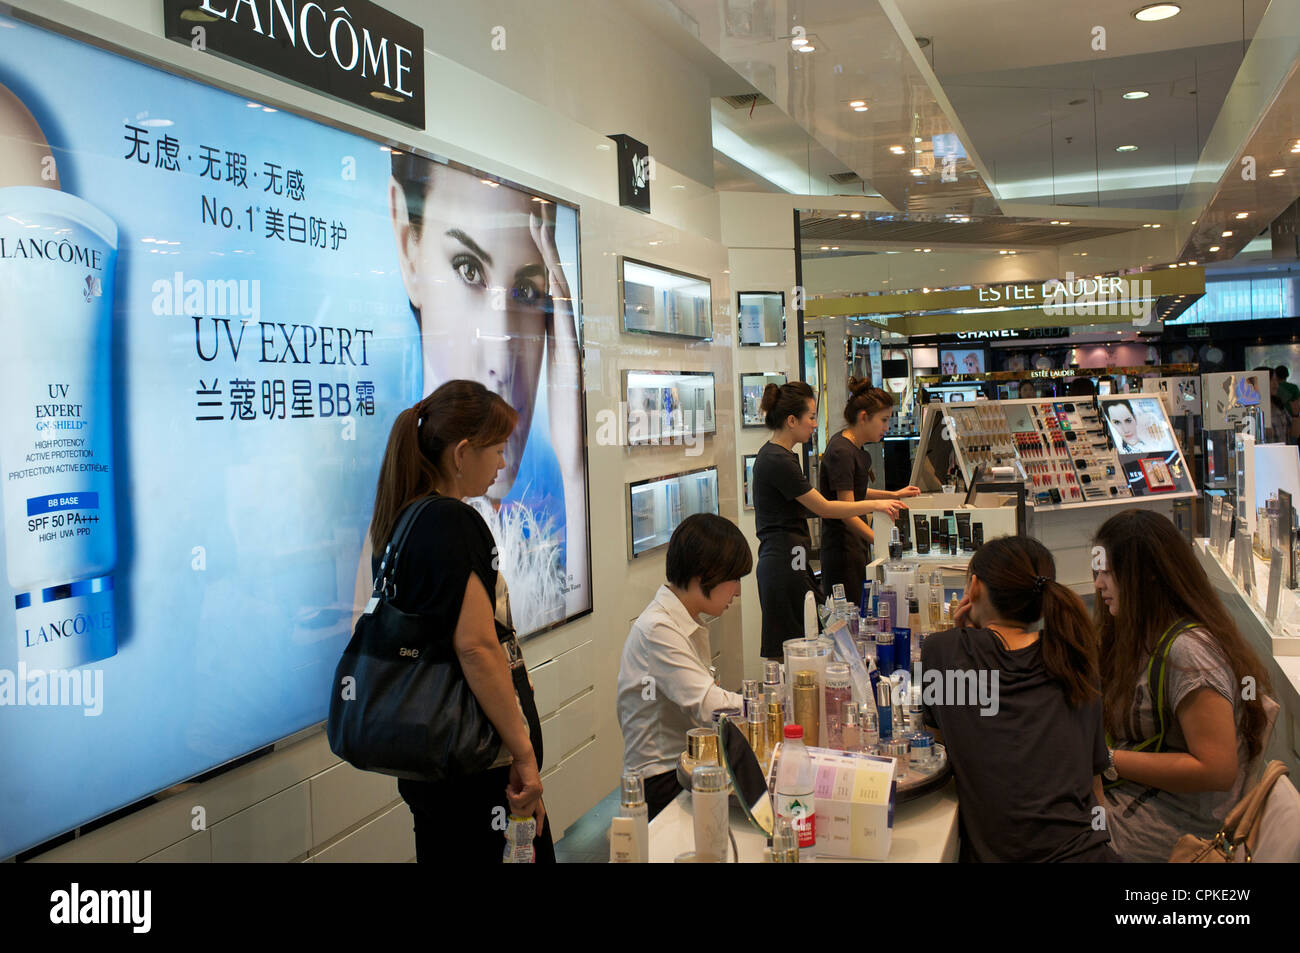 Chanel Singapore pop-up goes grandiose - Inside Retail Asia